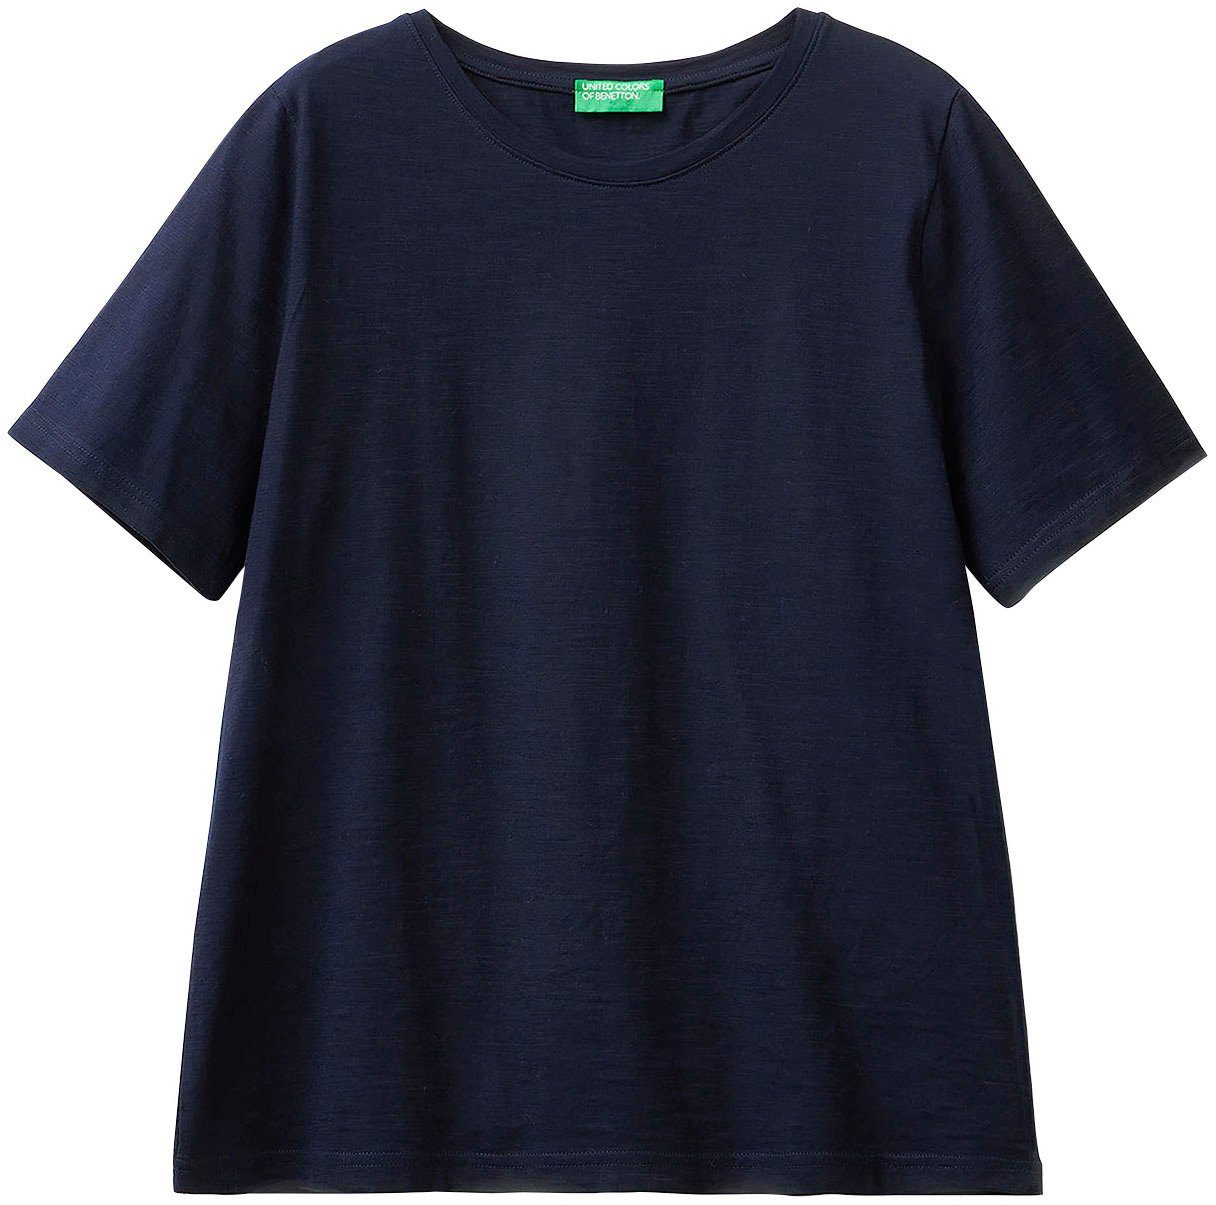 United Colors of Benetton marine T-Shirt Basic-Optik in cleaner